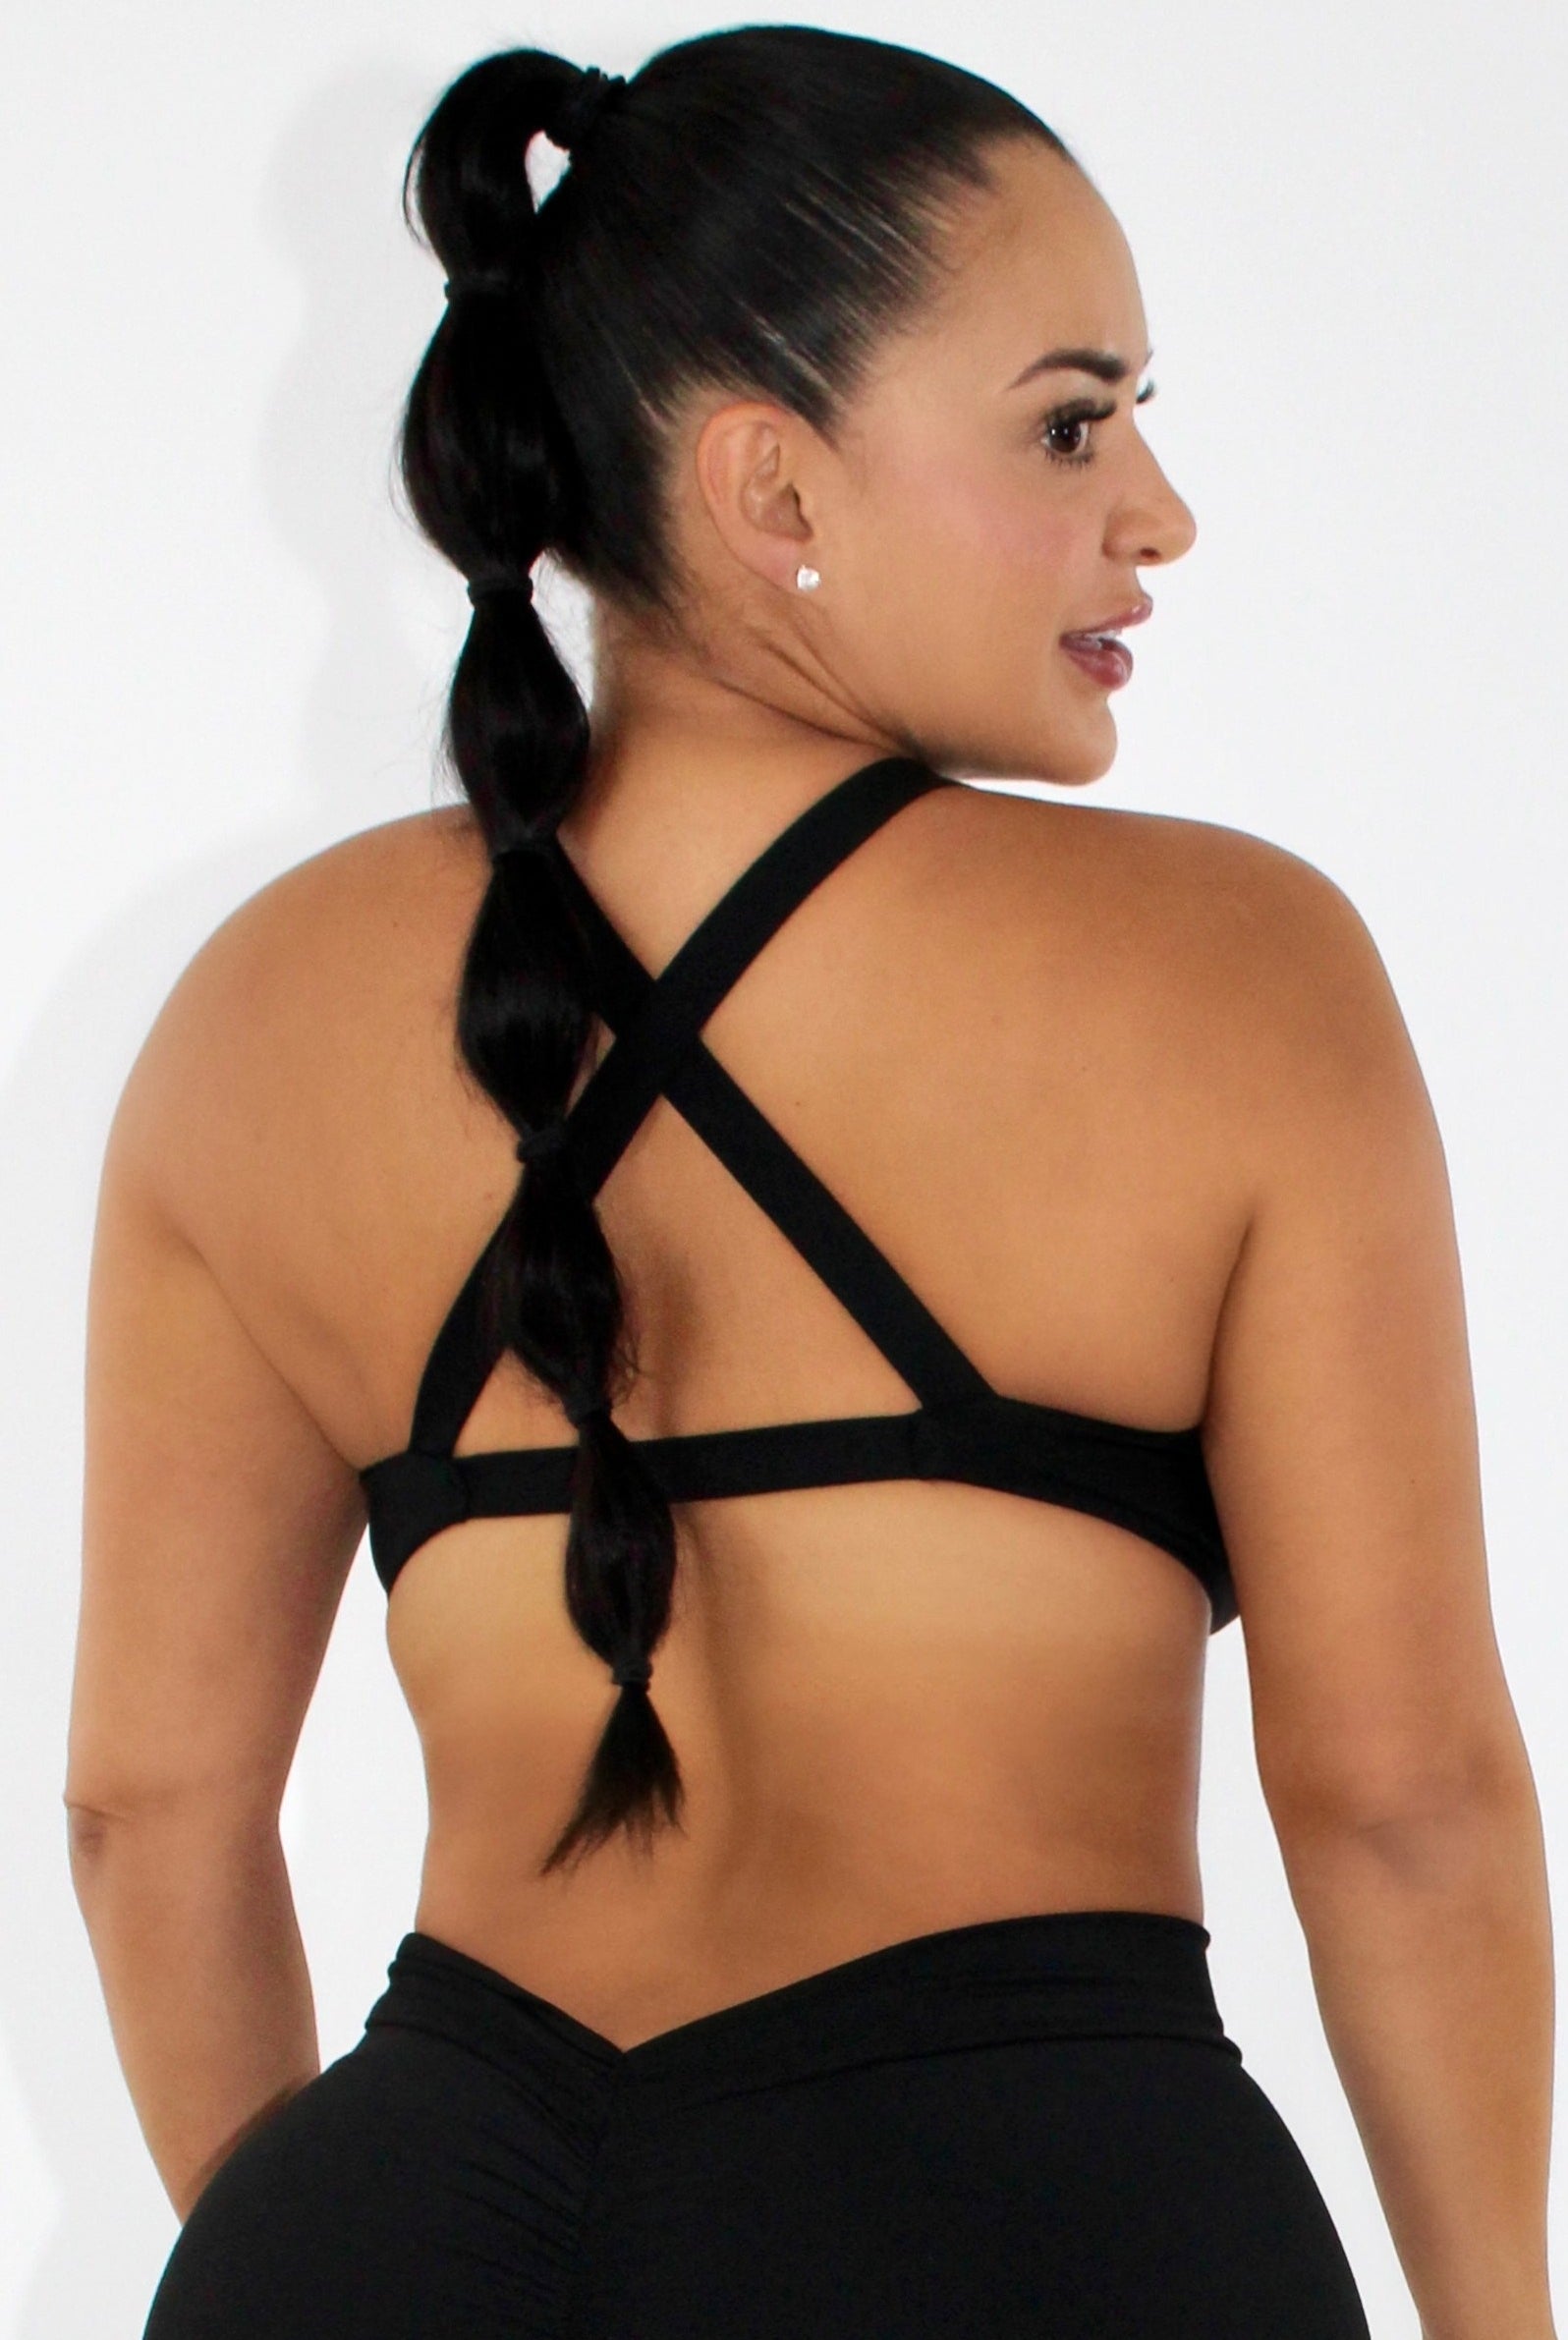 Woman wearing black leggings and a black sports bra - showing back side